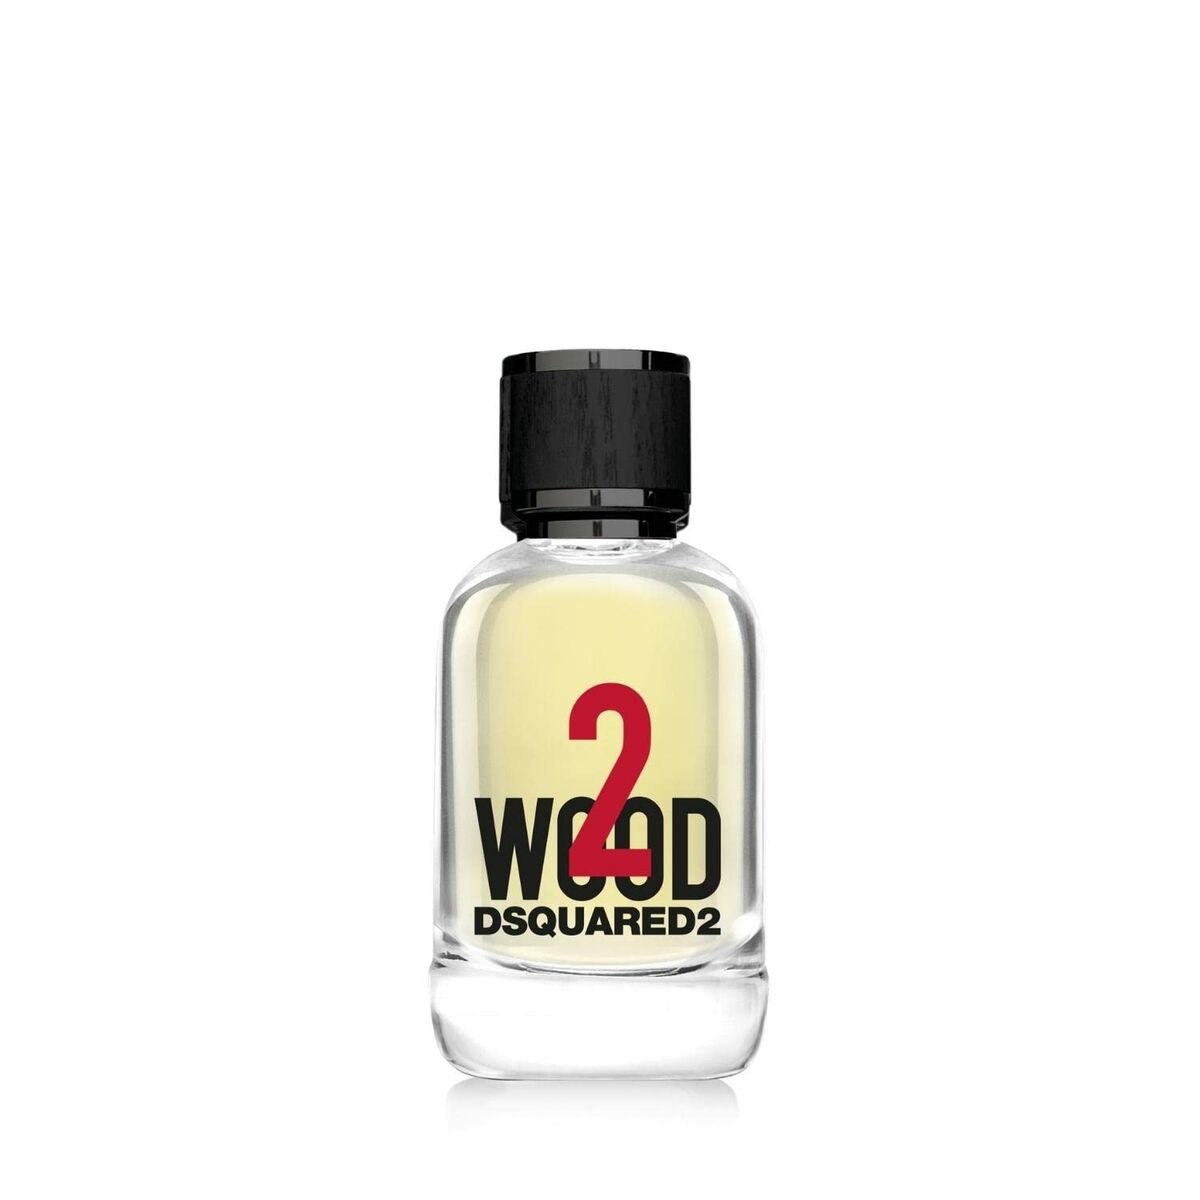 Unisex Perfume Dsquared2 EDT 2 Wood 50 ml